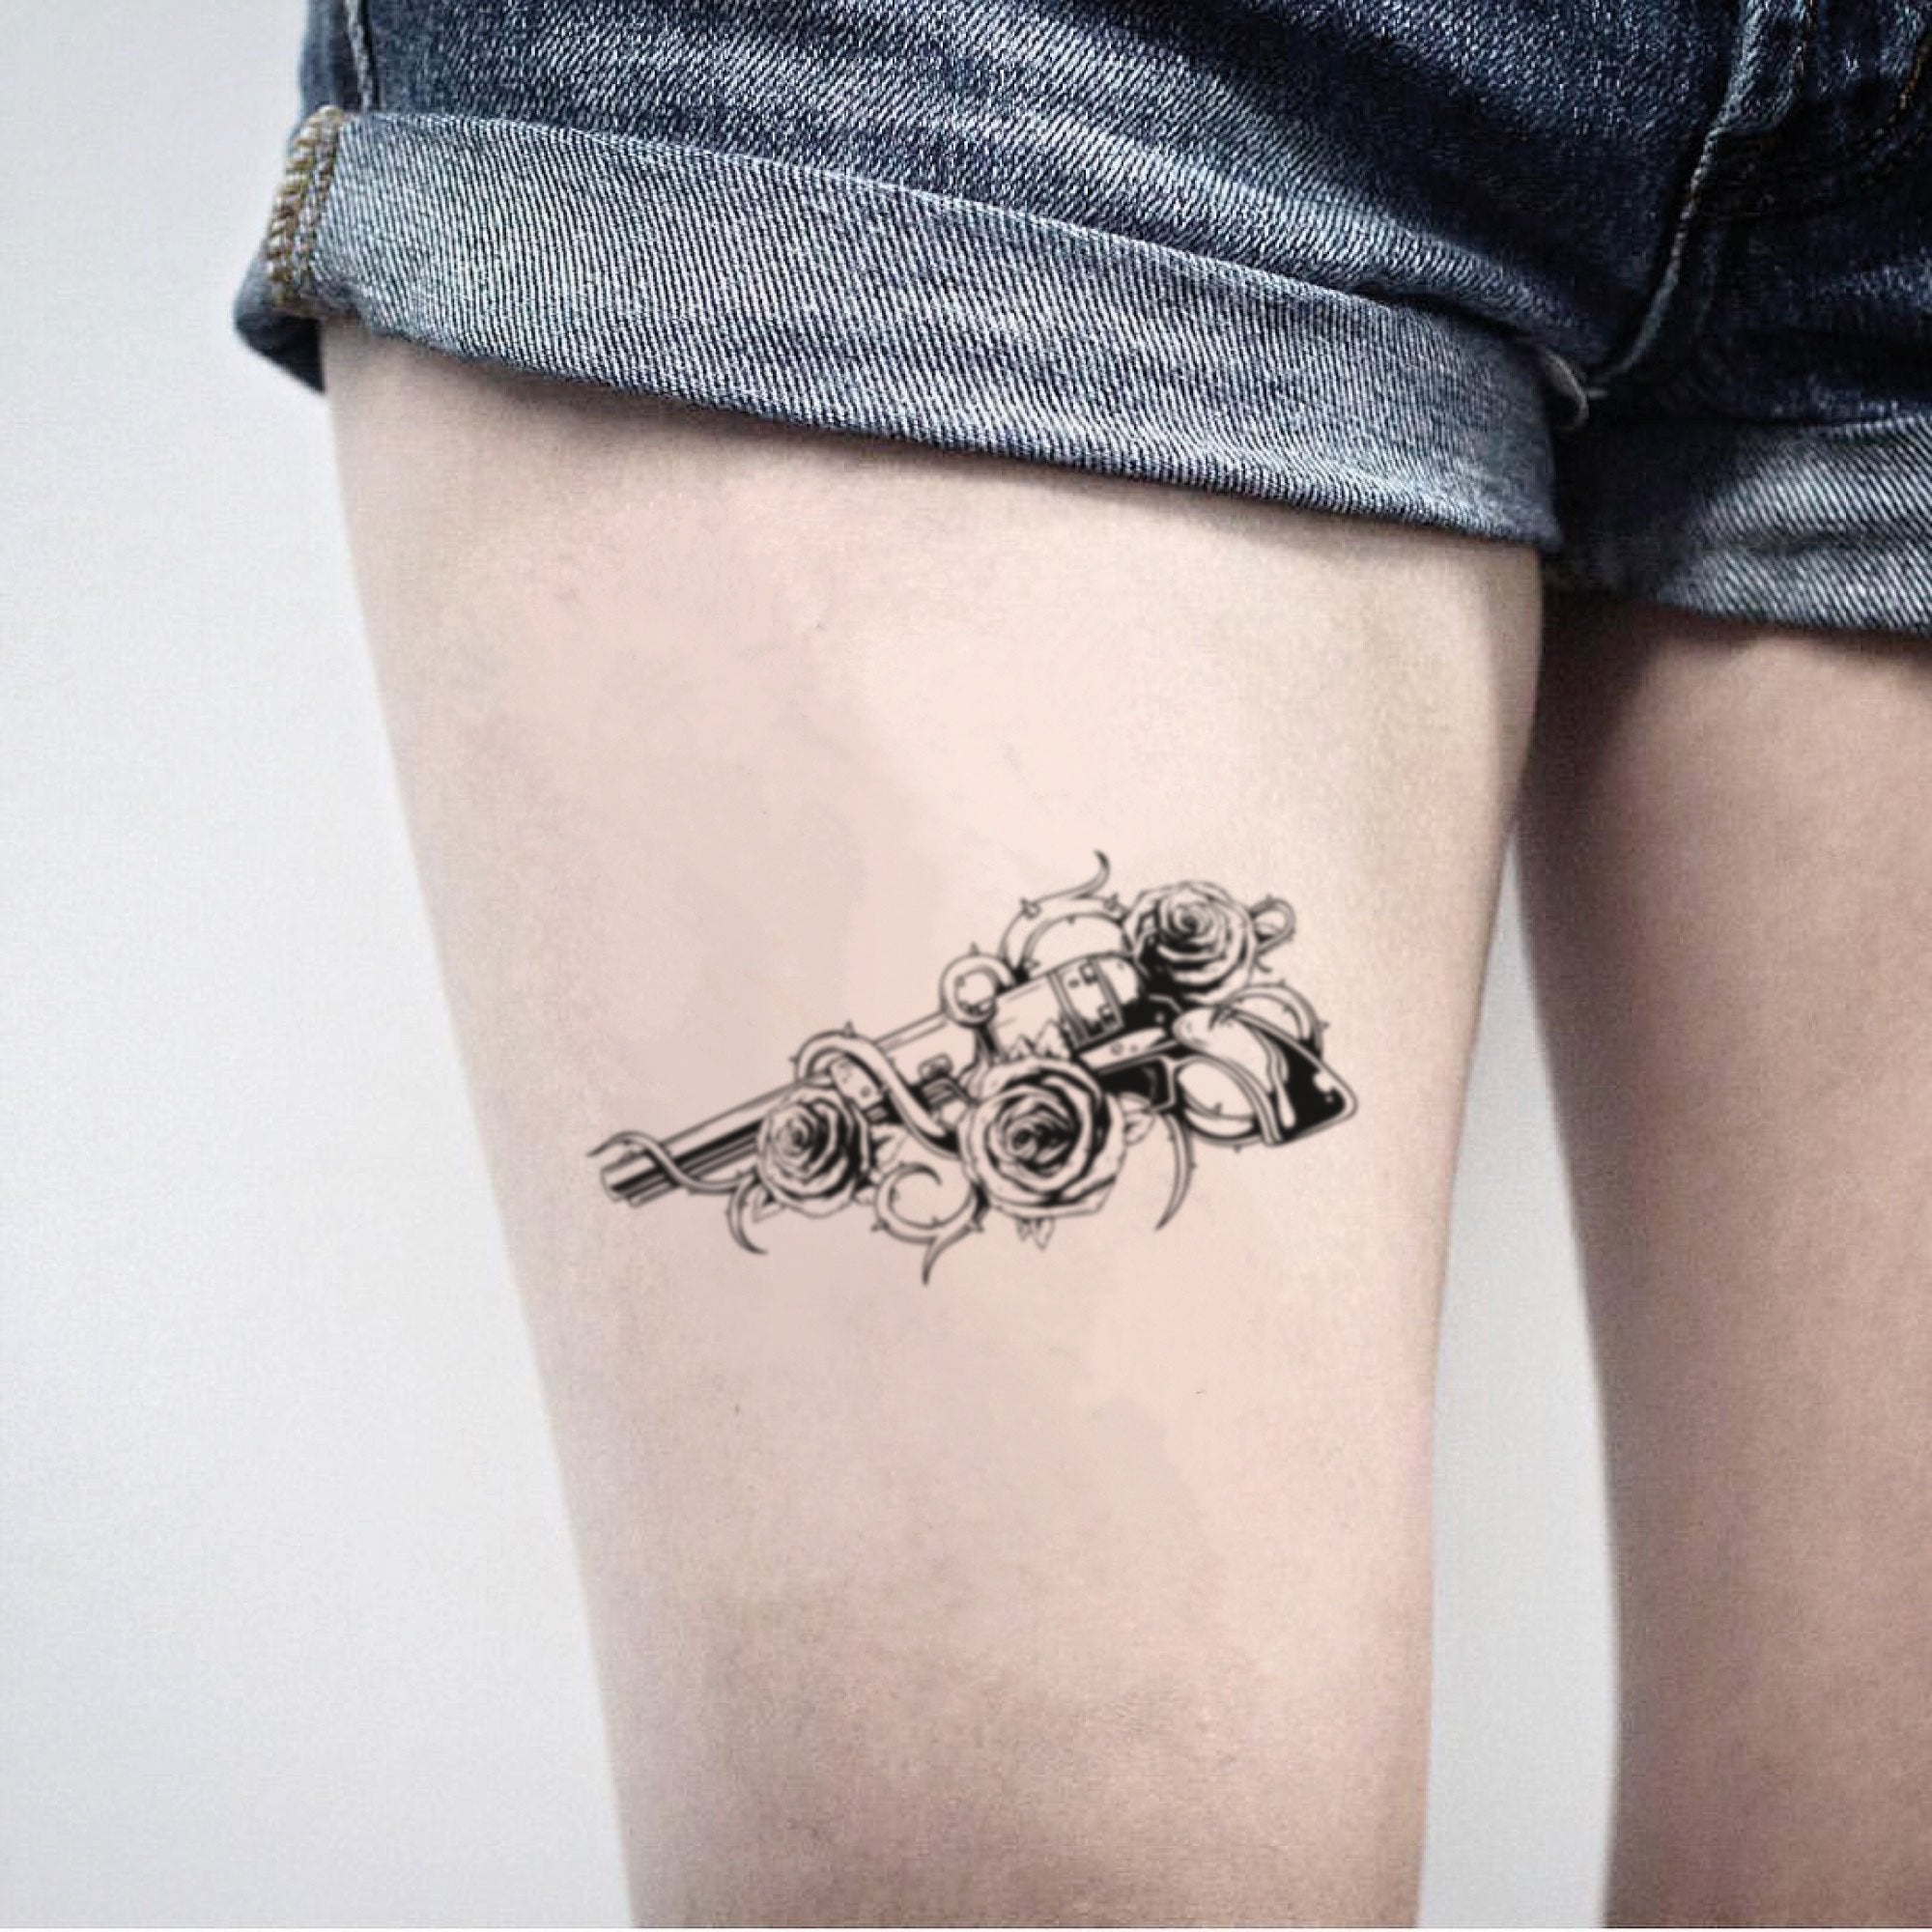 guns and roses thigh tattoo